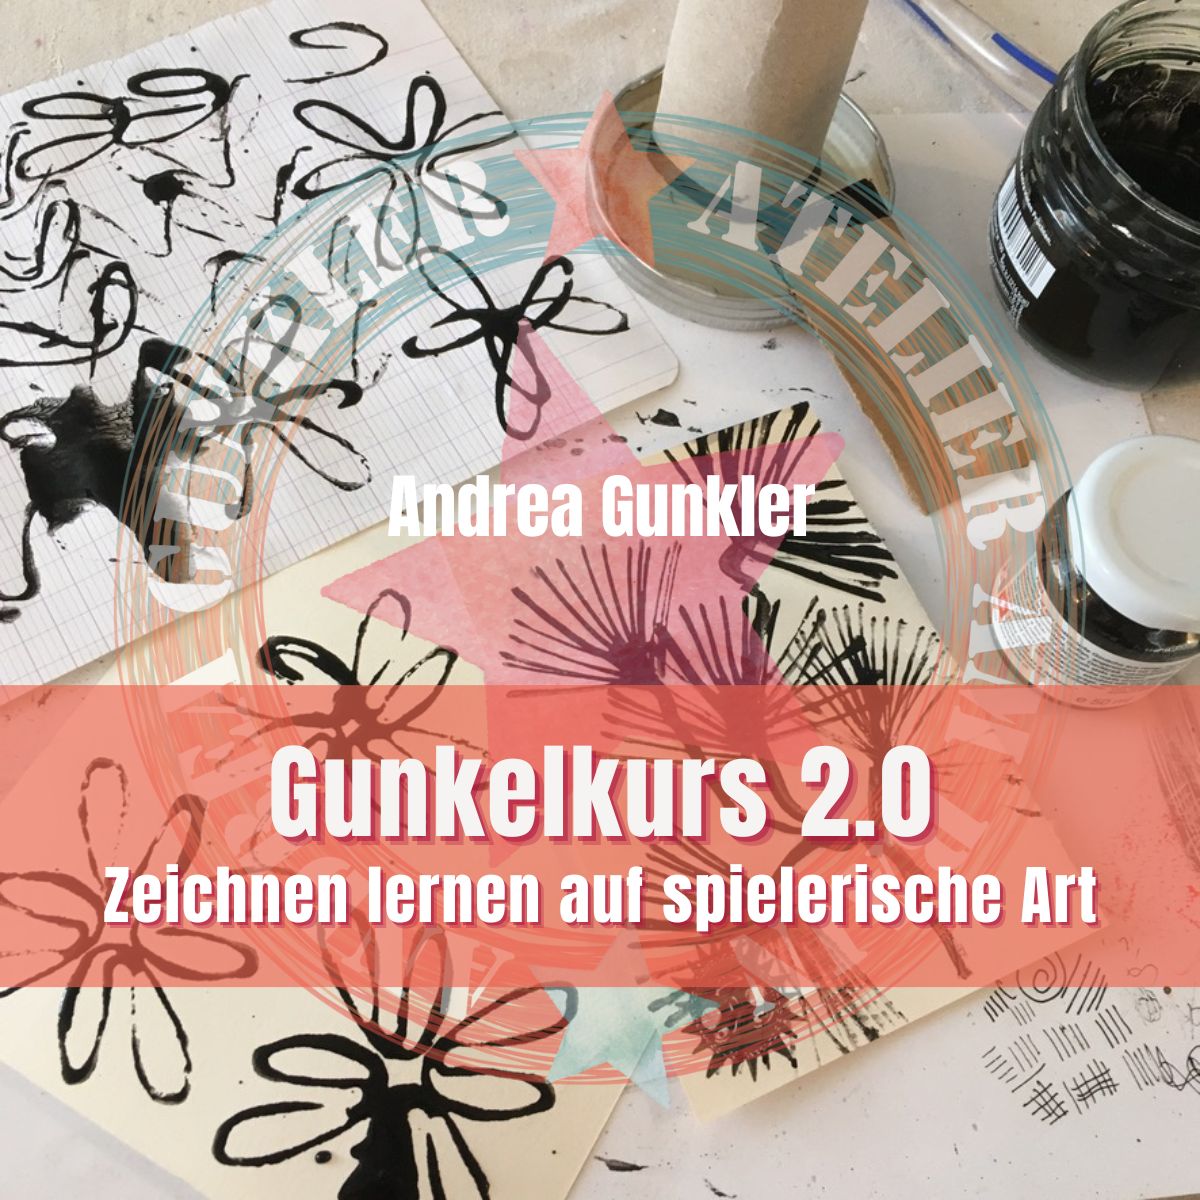 Gunkelkurs 2.0 mit Andrea Gunkler